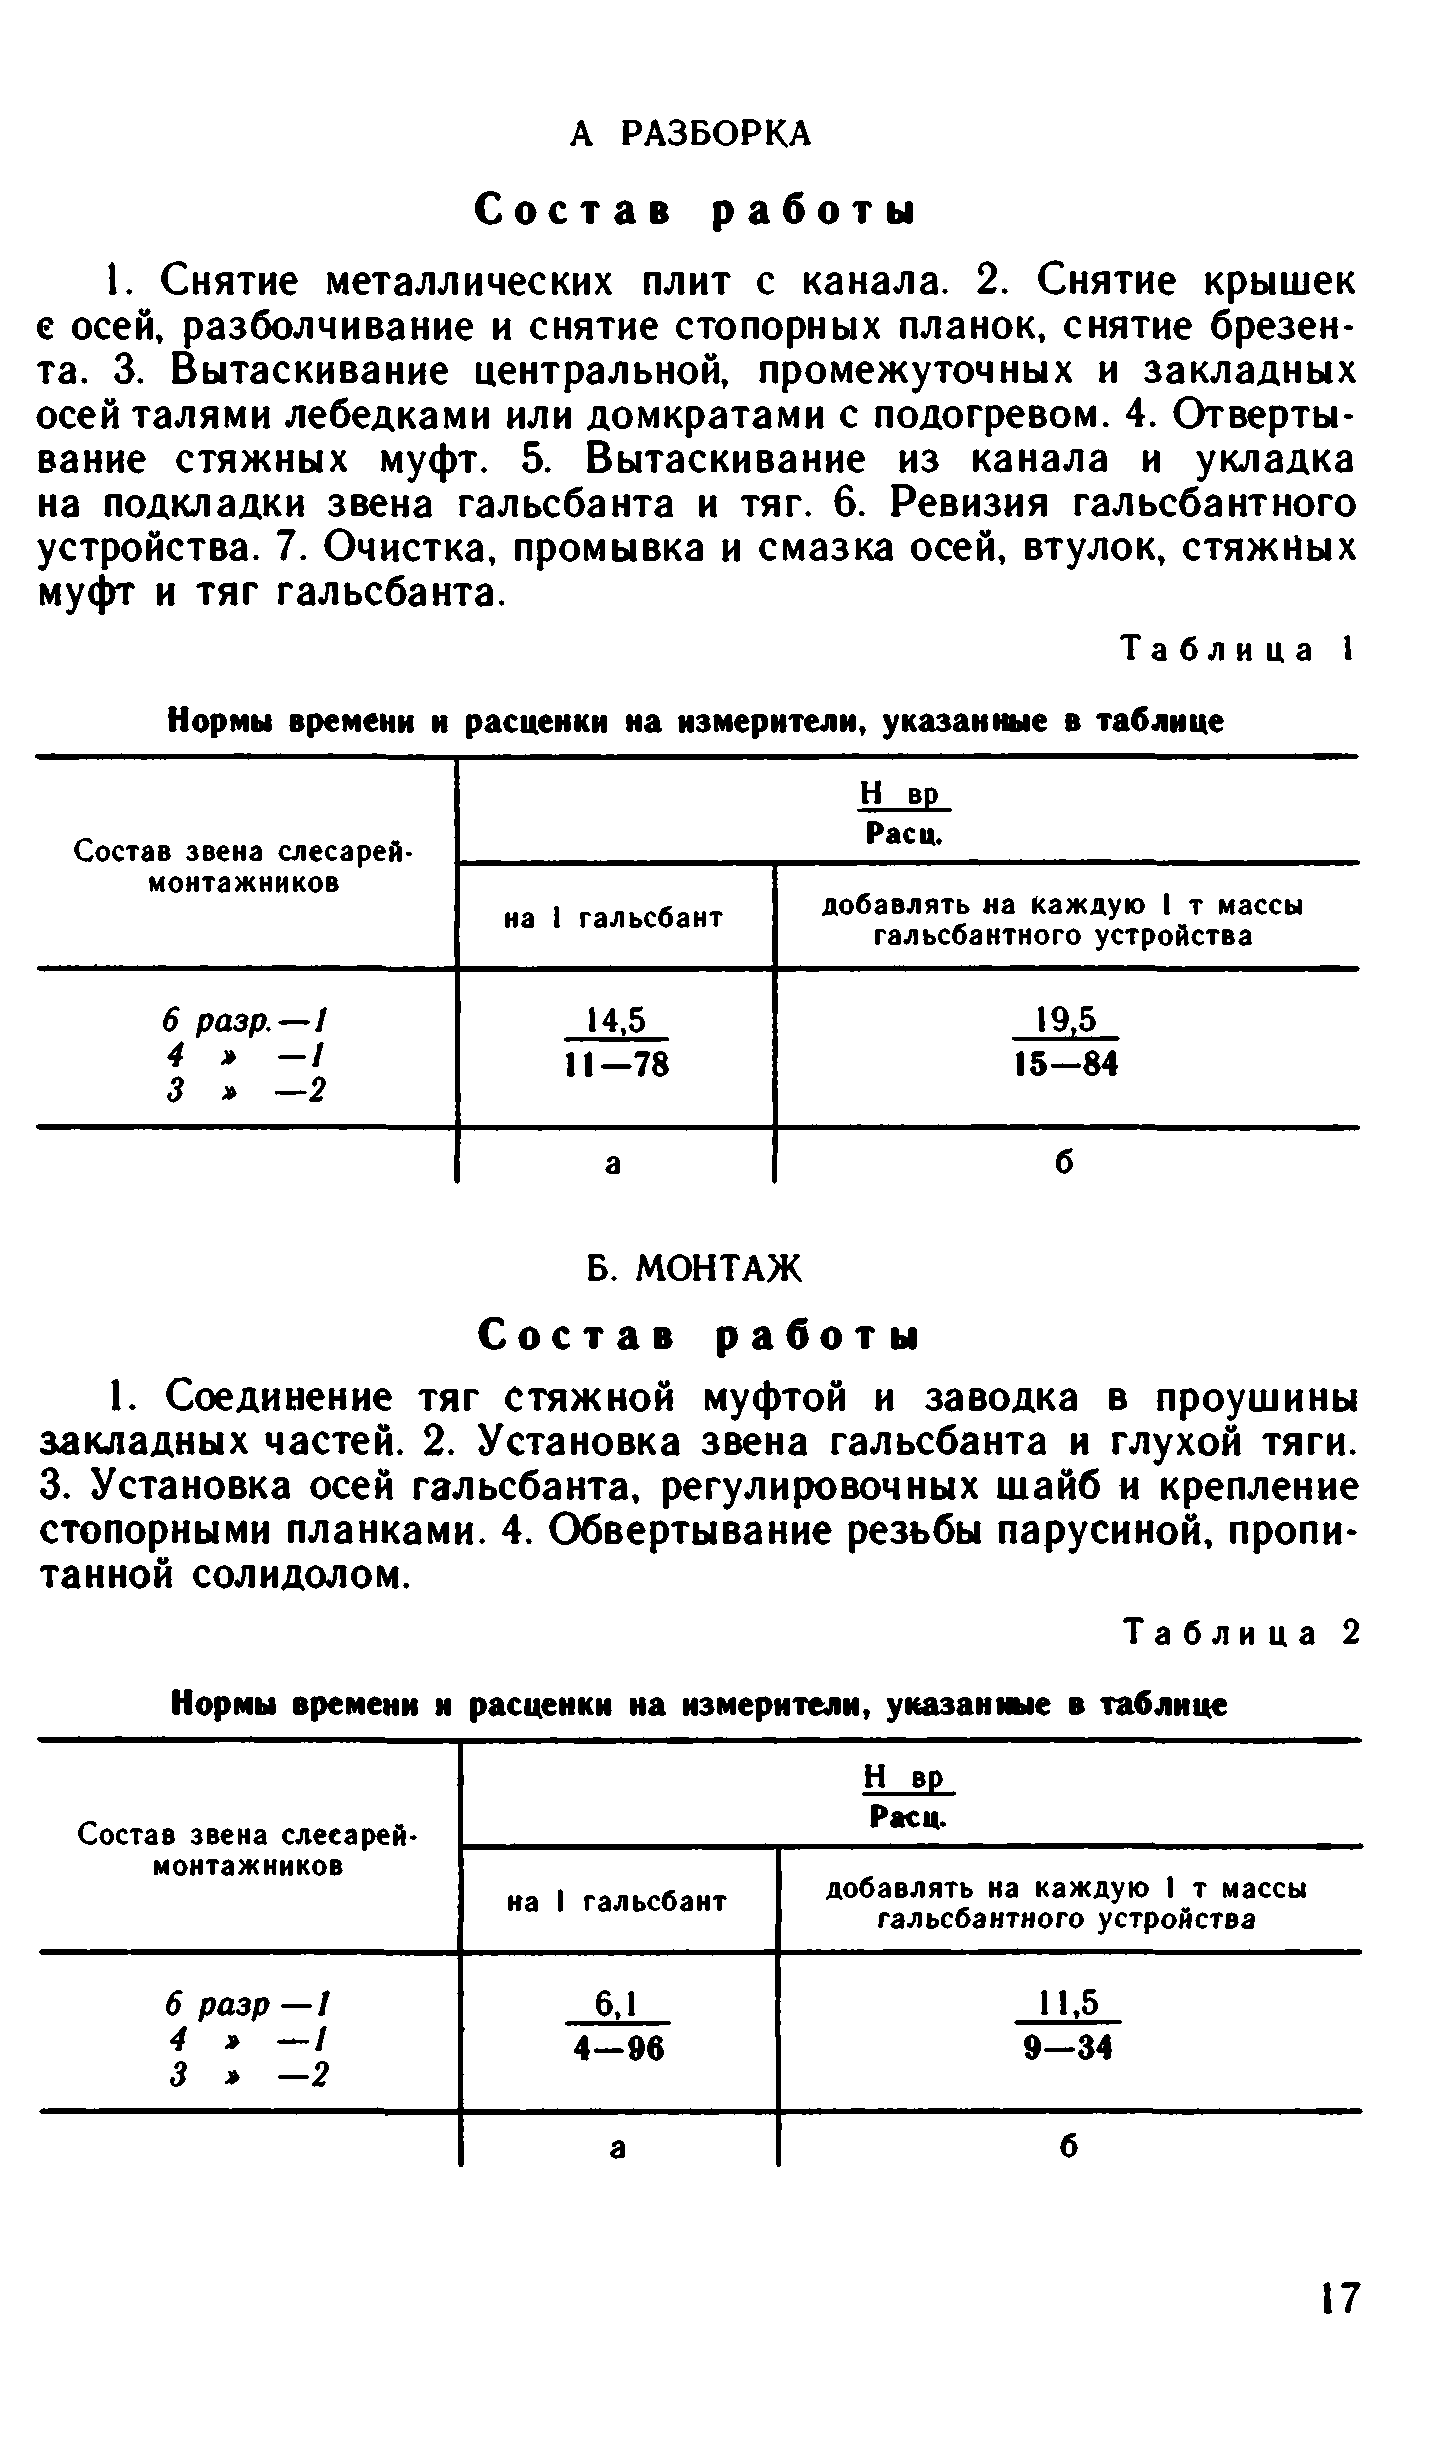 ВНиР В13-4